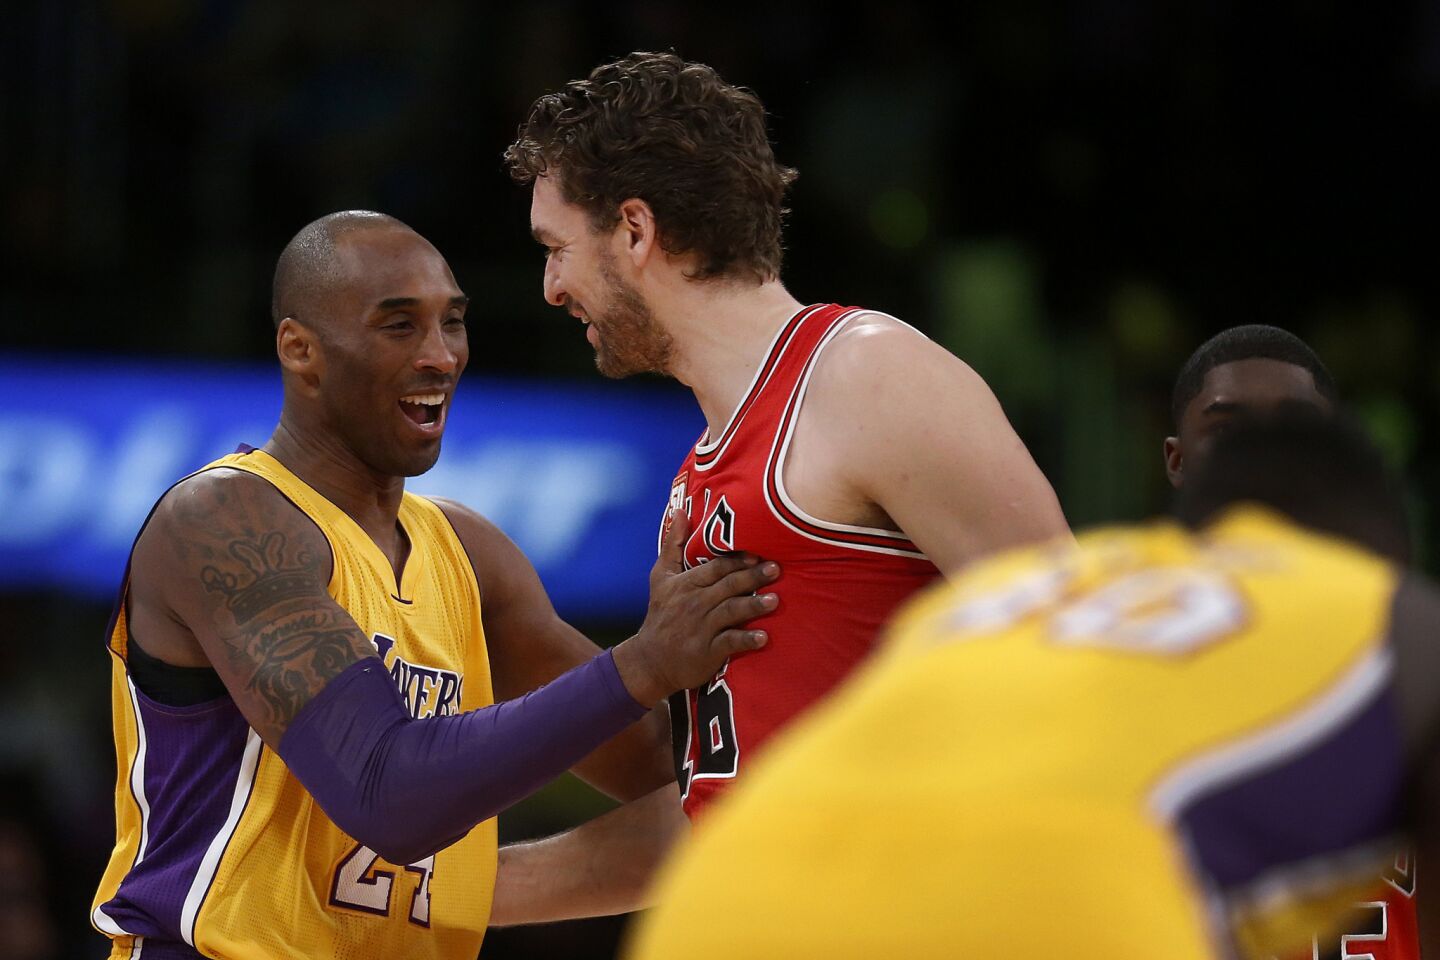 Lakers star Kobe Bryant greets former teammate Pau Gasol before the game against the Bulls.